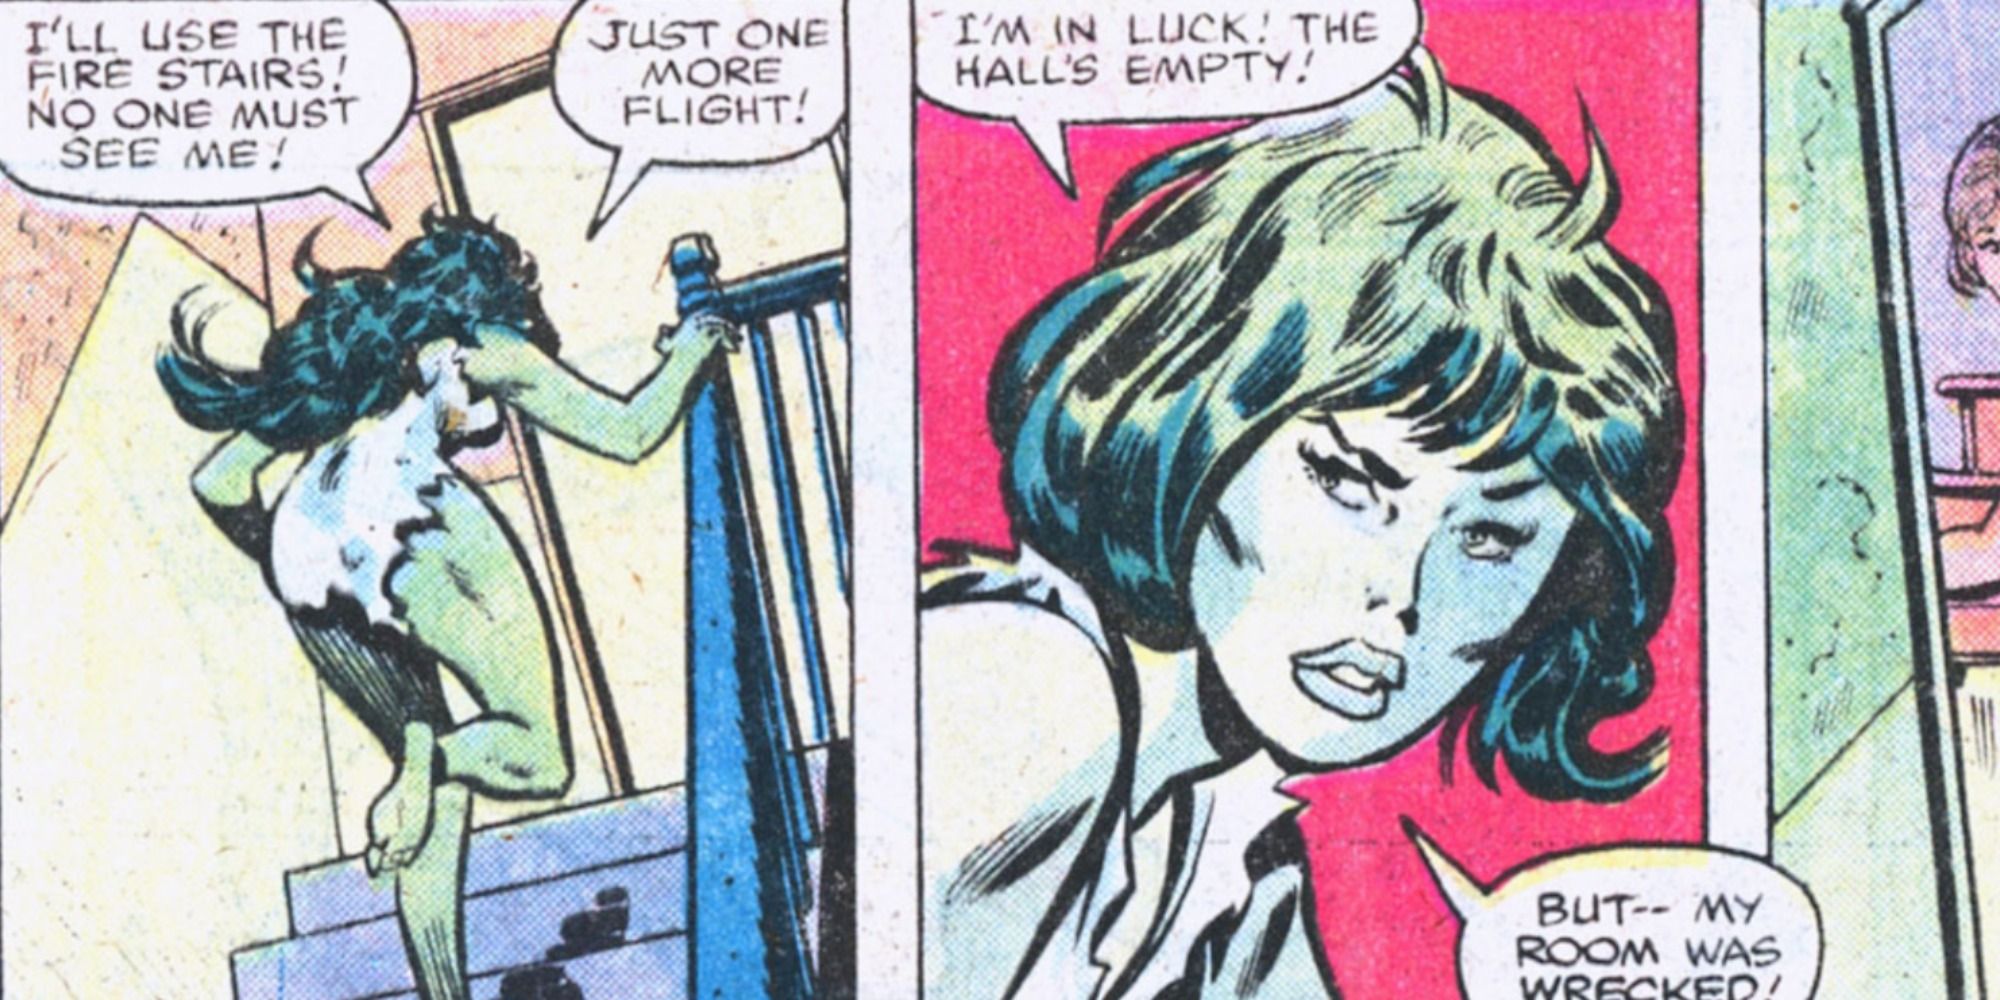 She-Hulk reverts back to human form in Marvel Comics.